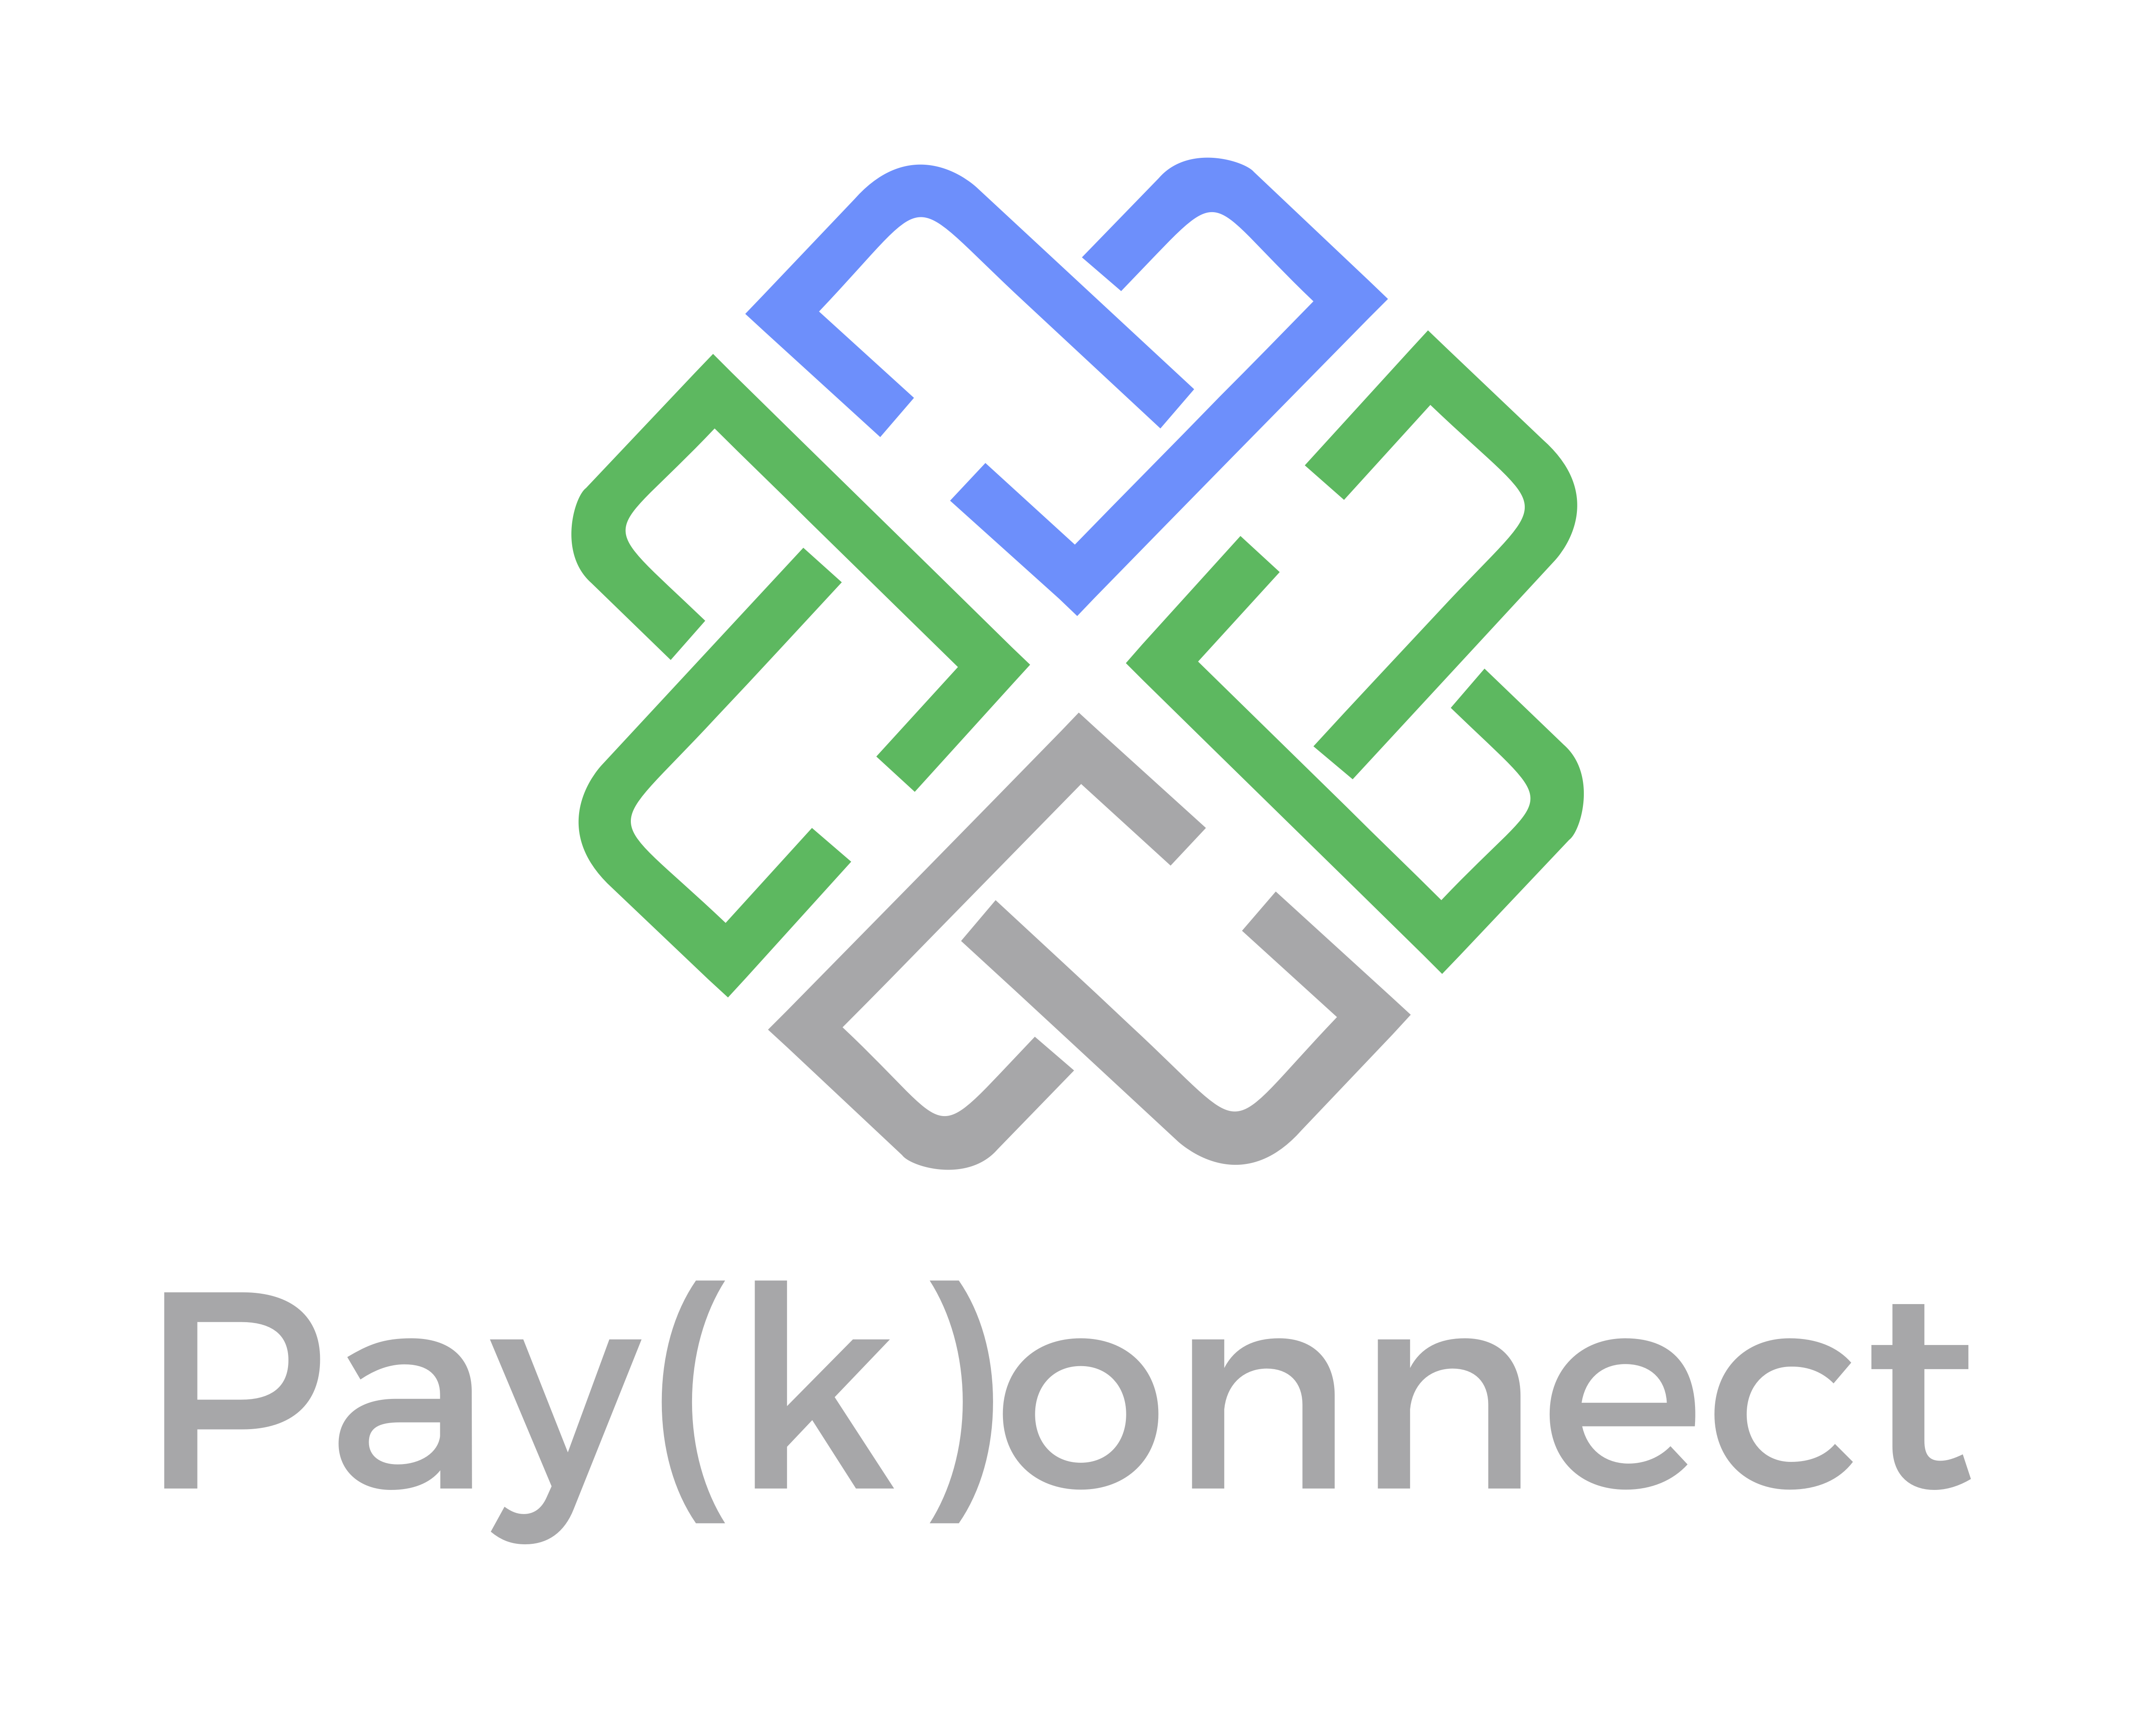 Paykonnect Signin